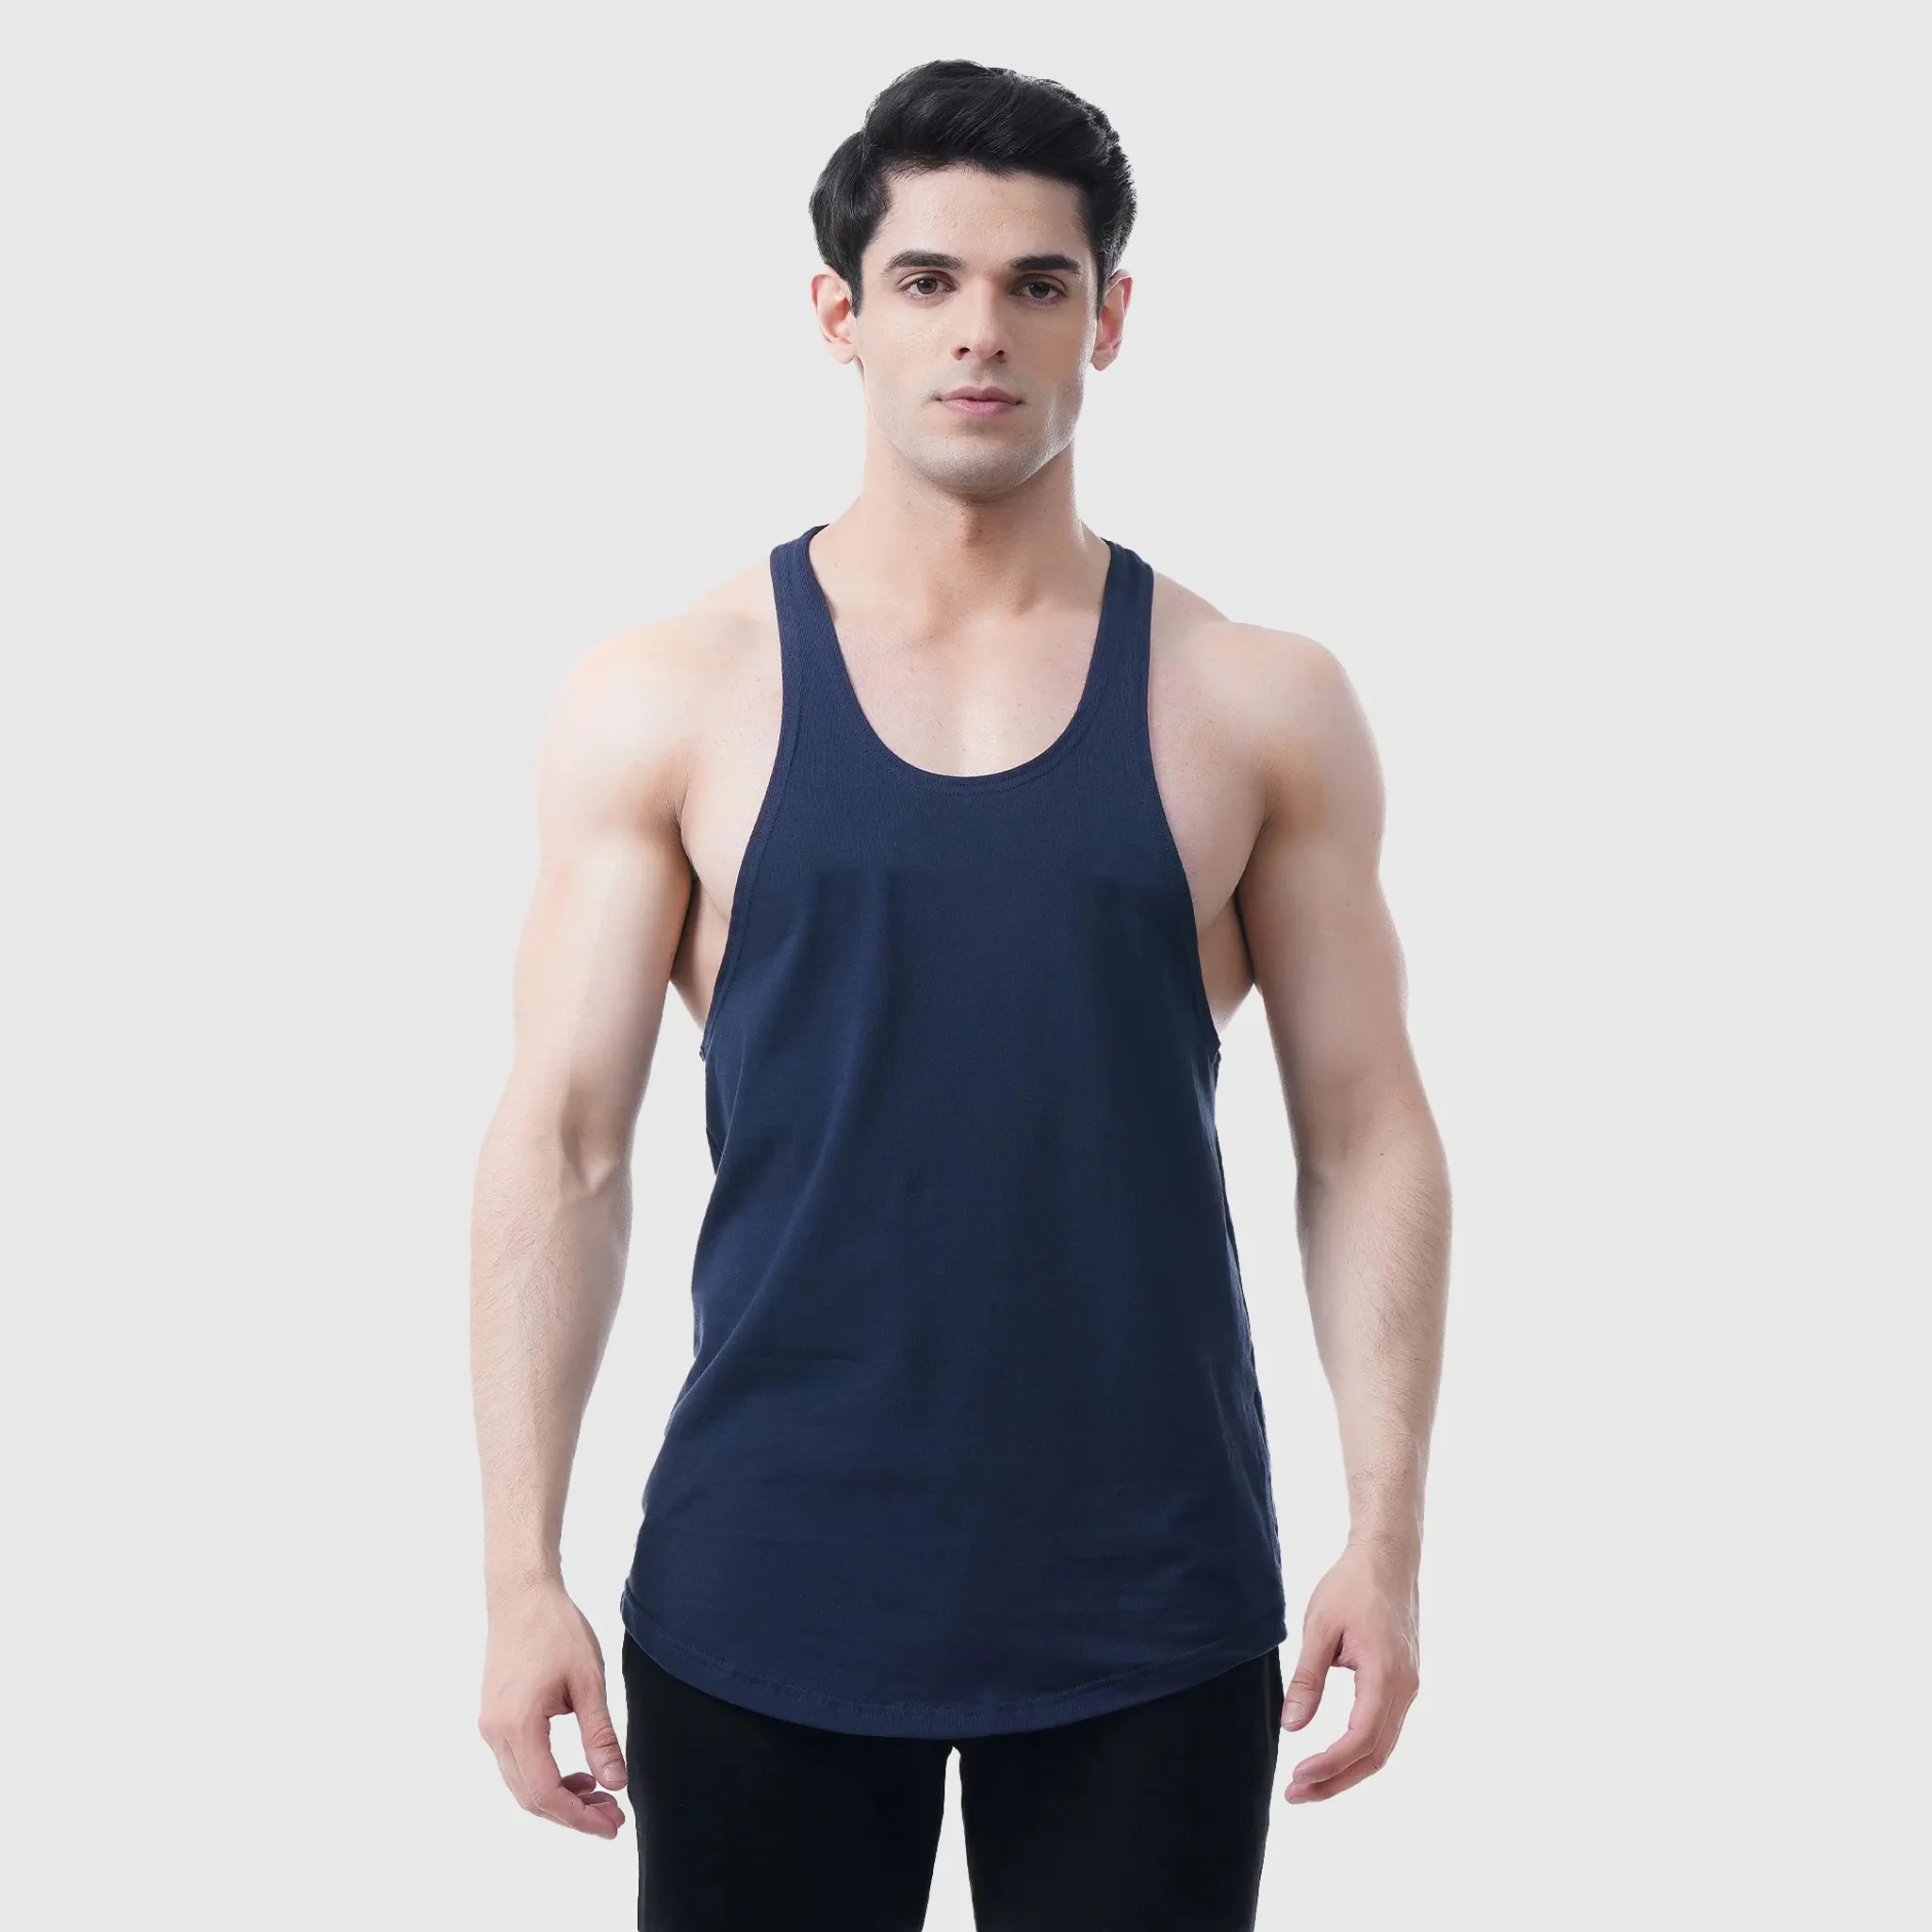 Wholesale Men's Sleeveless Vest Basketball Fitness Running Quick-drying Tank Top Men Gym Shirt